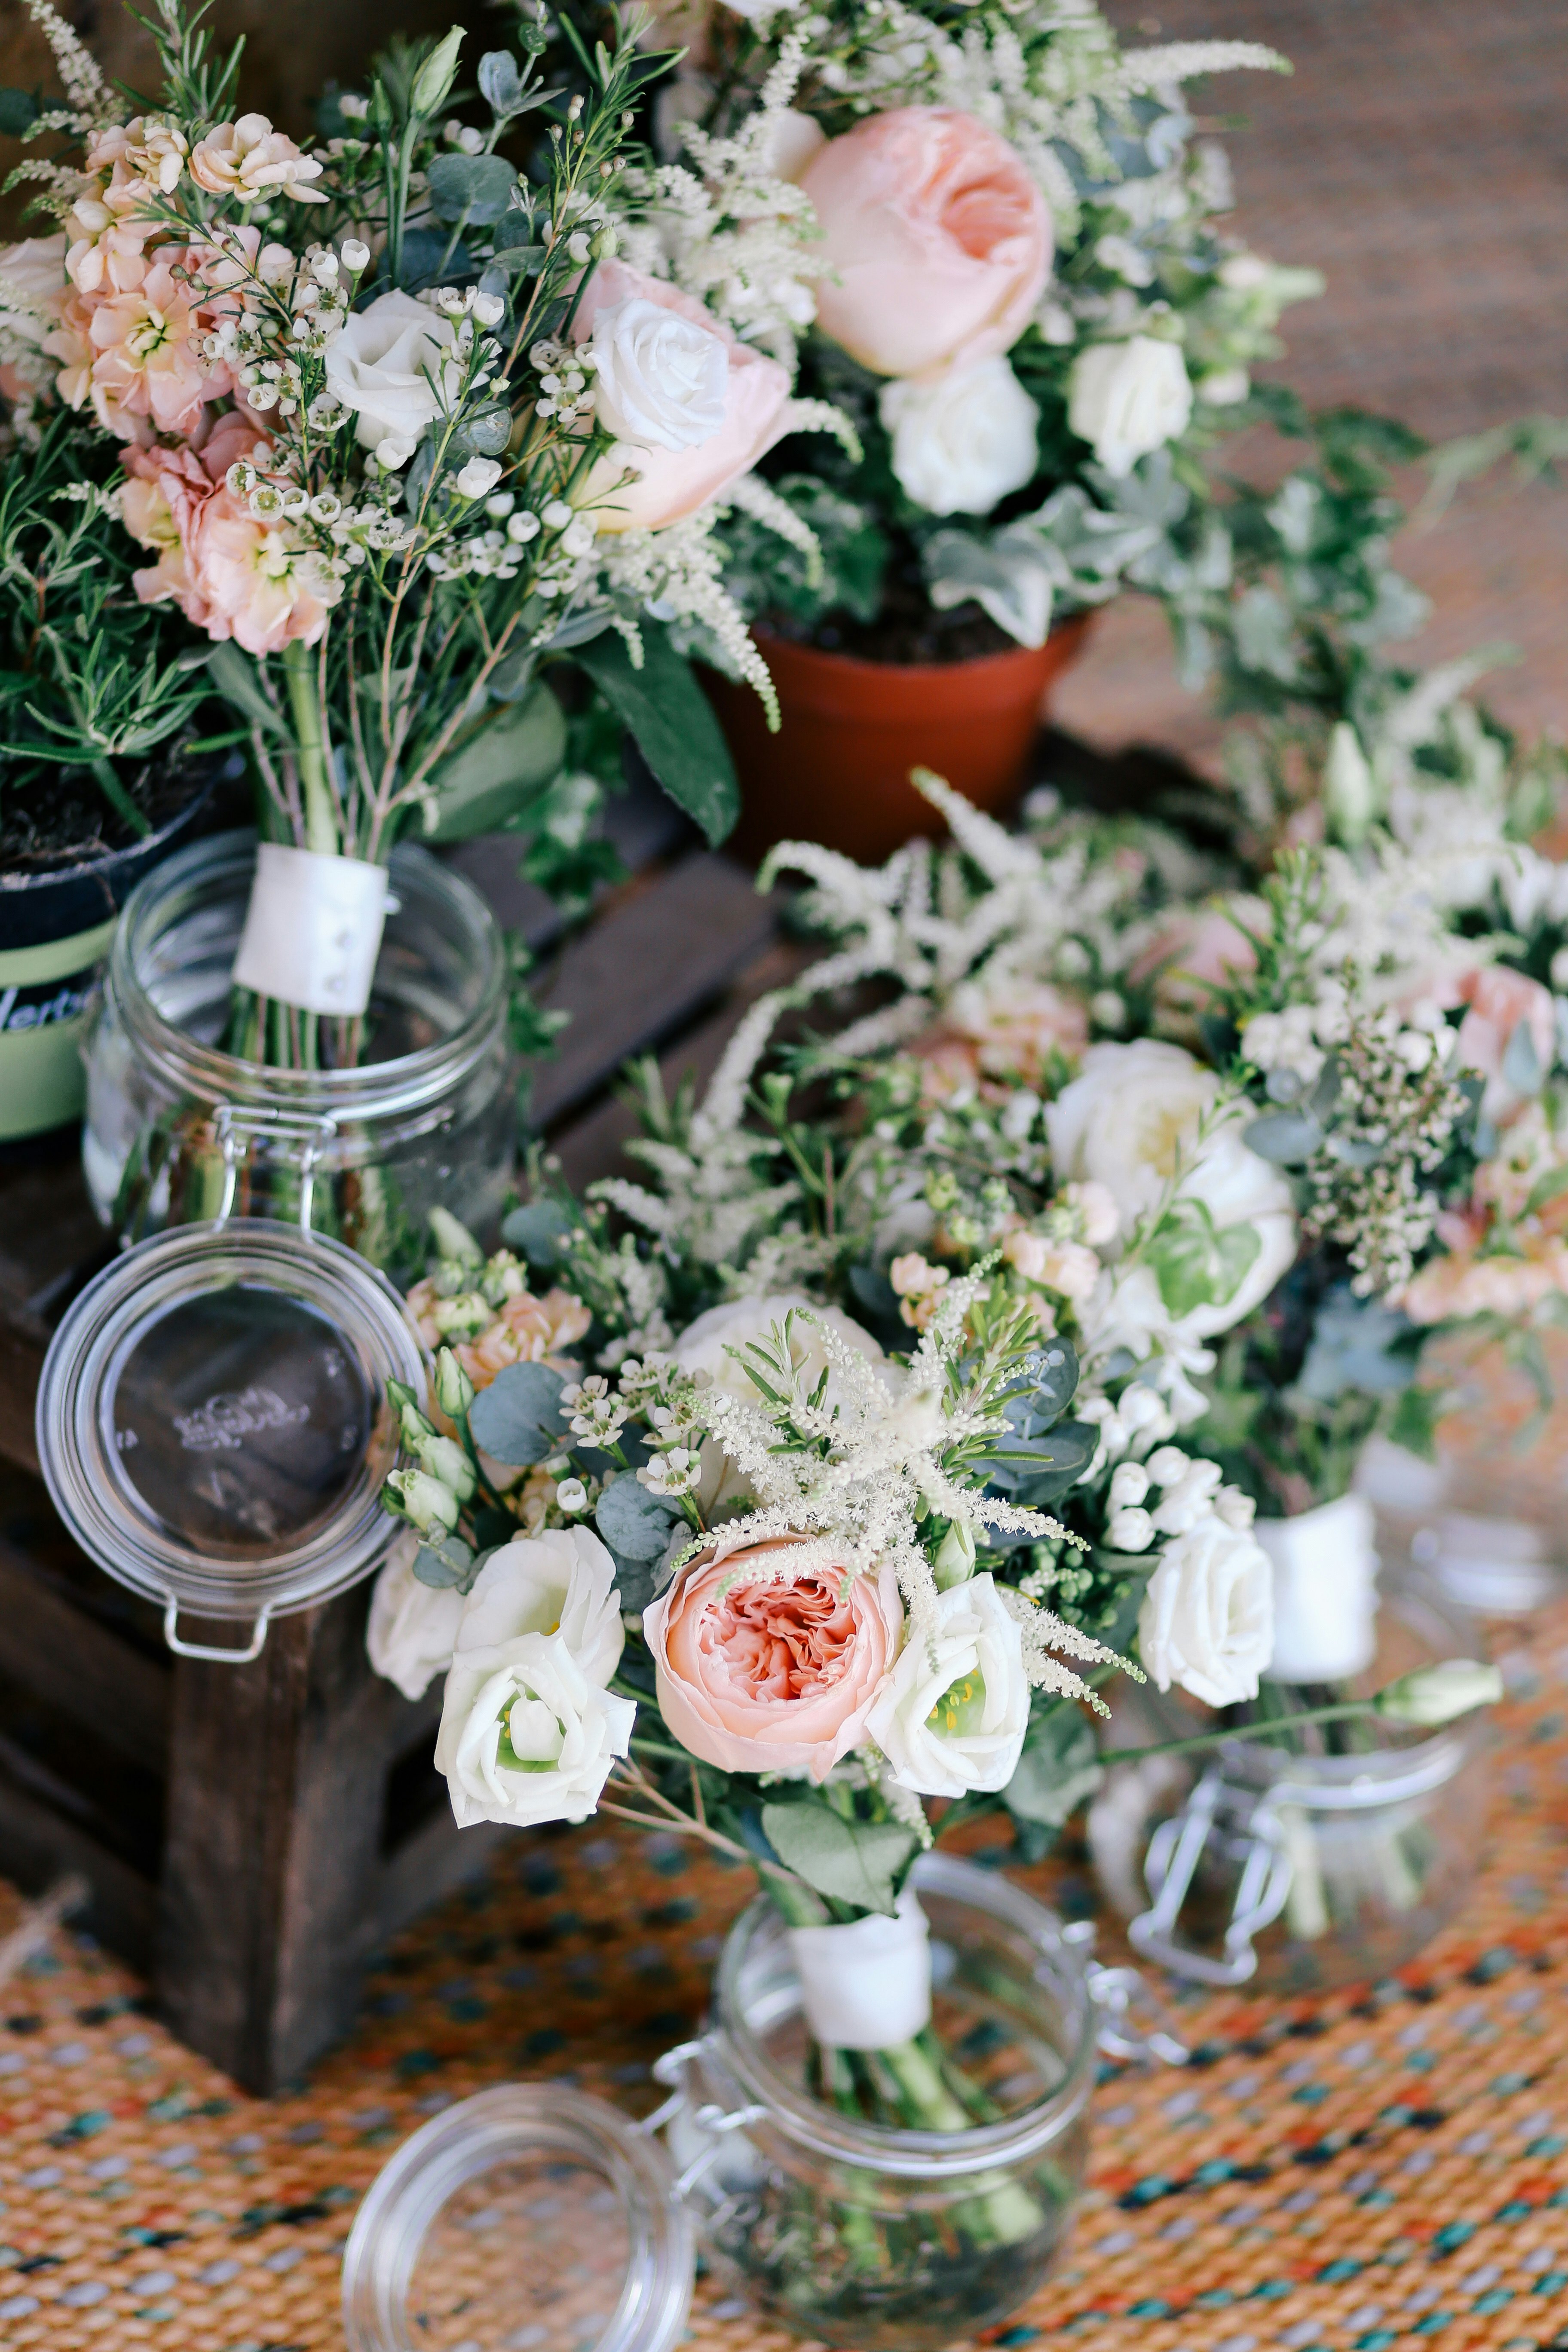 100 Wedding Flower Pictures Download Free Images On Unsplash